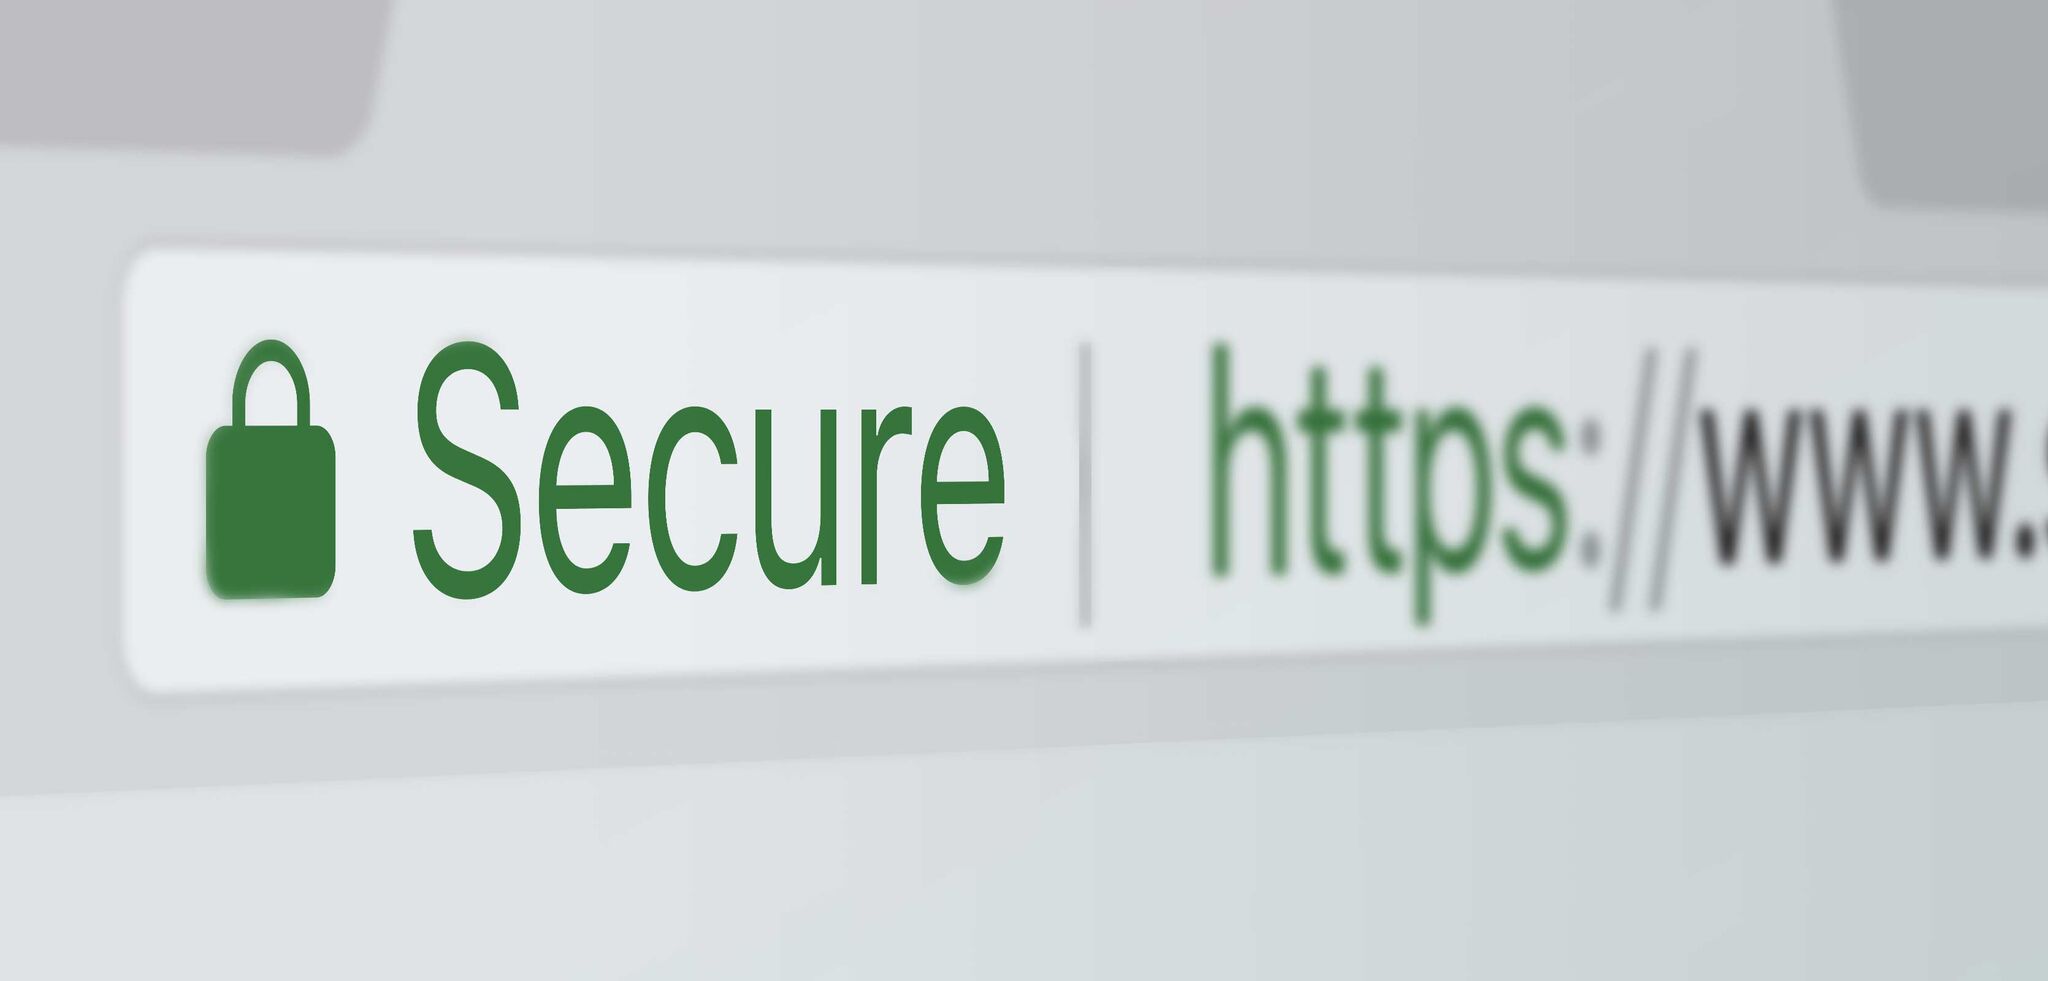 Https secure archiveofourown org. SSL сертификат. SSL сертификат для сайта. SSL сертификат картинки. ССЛ сертификат.